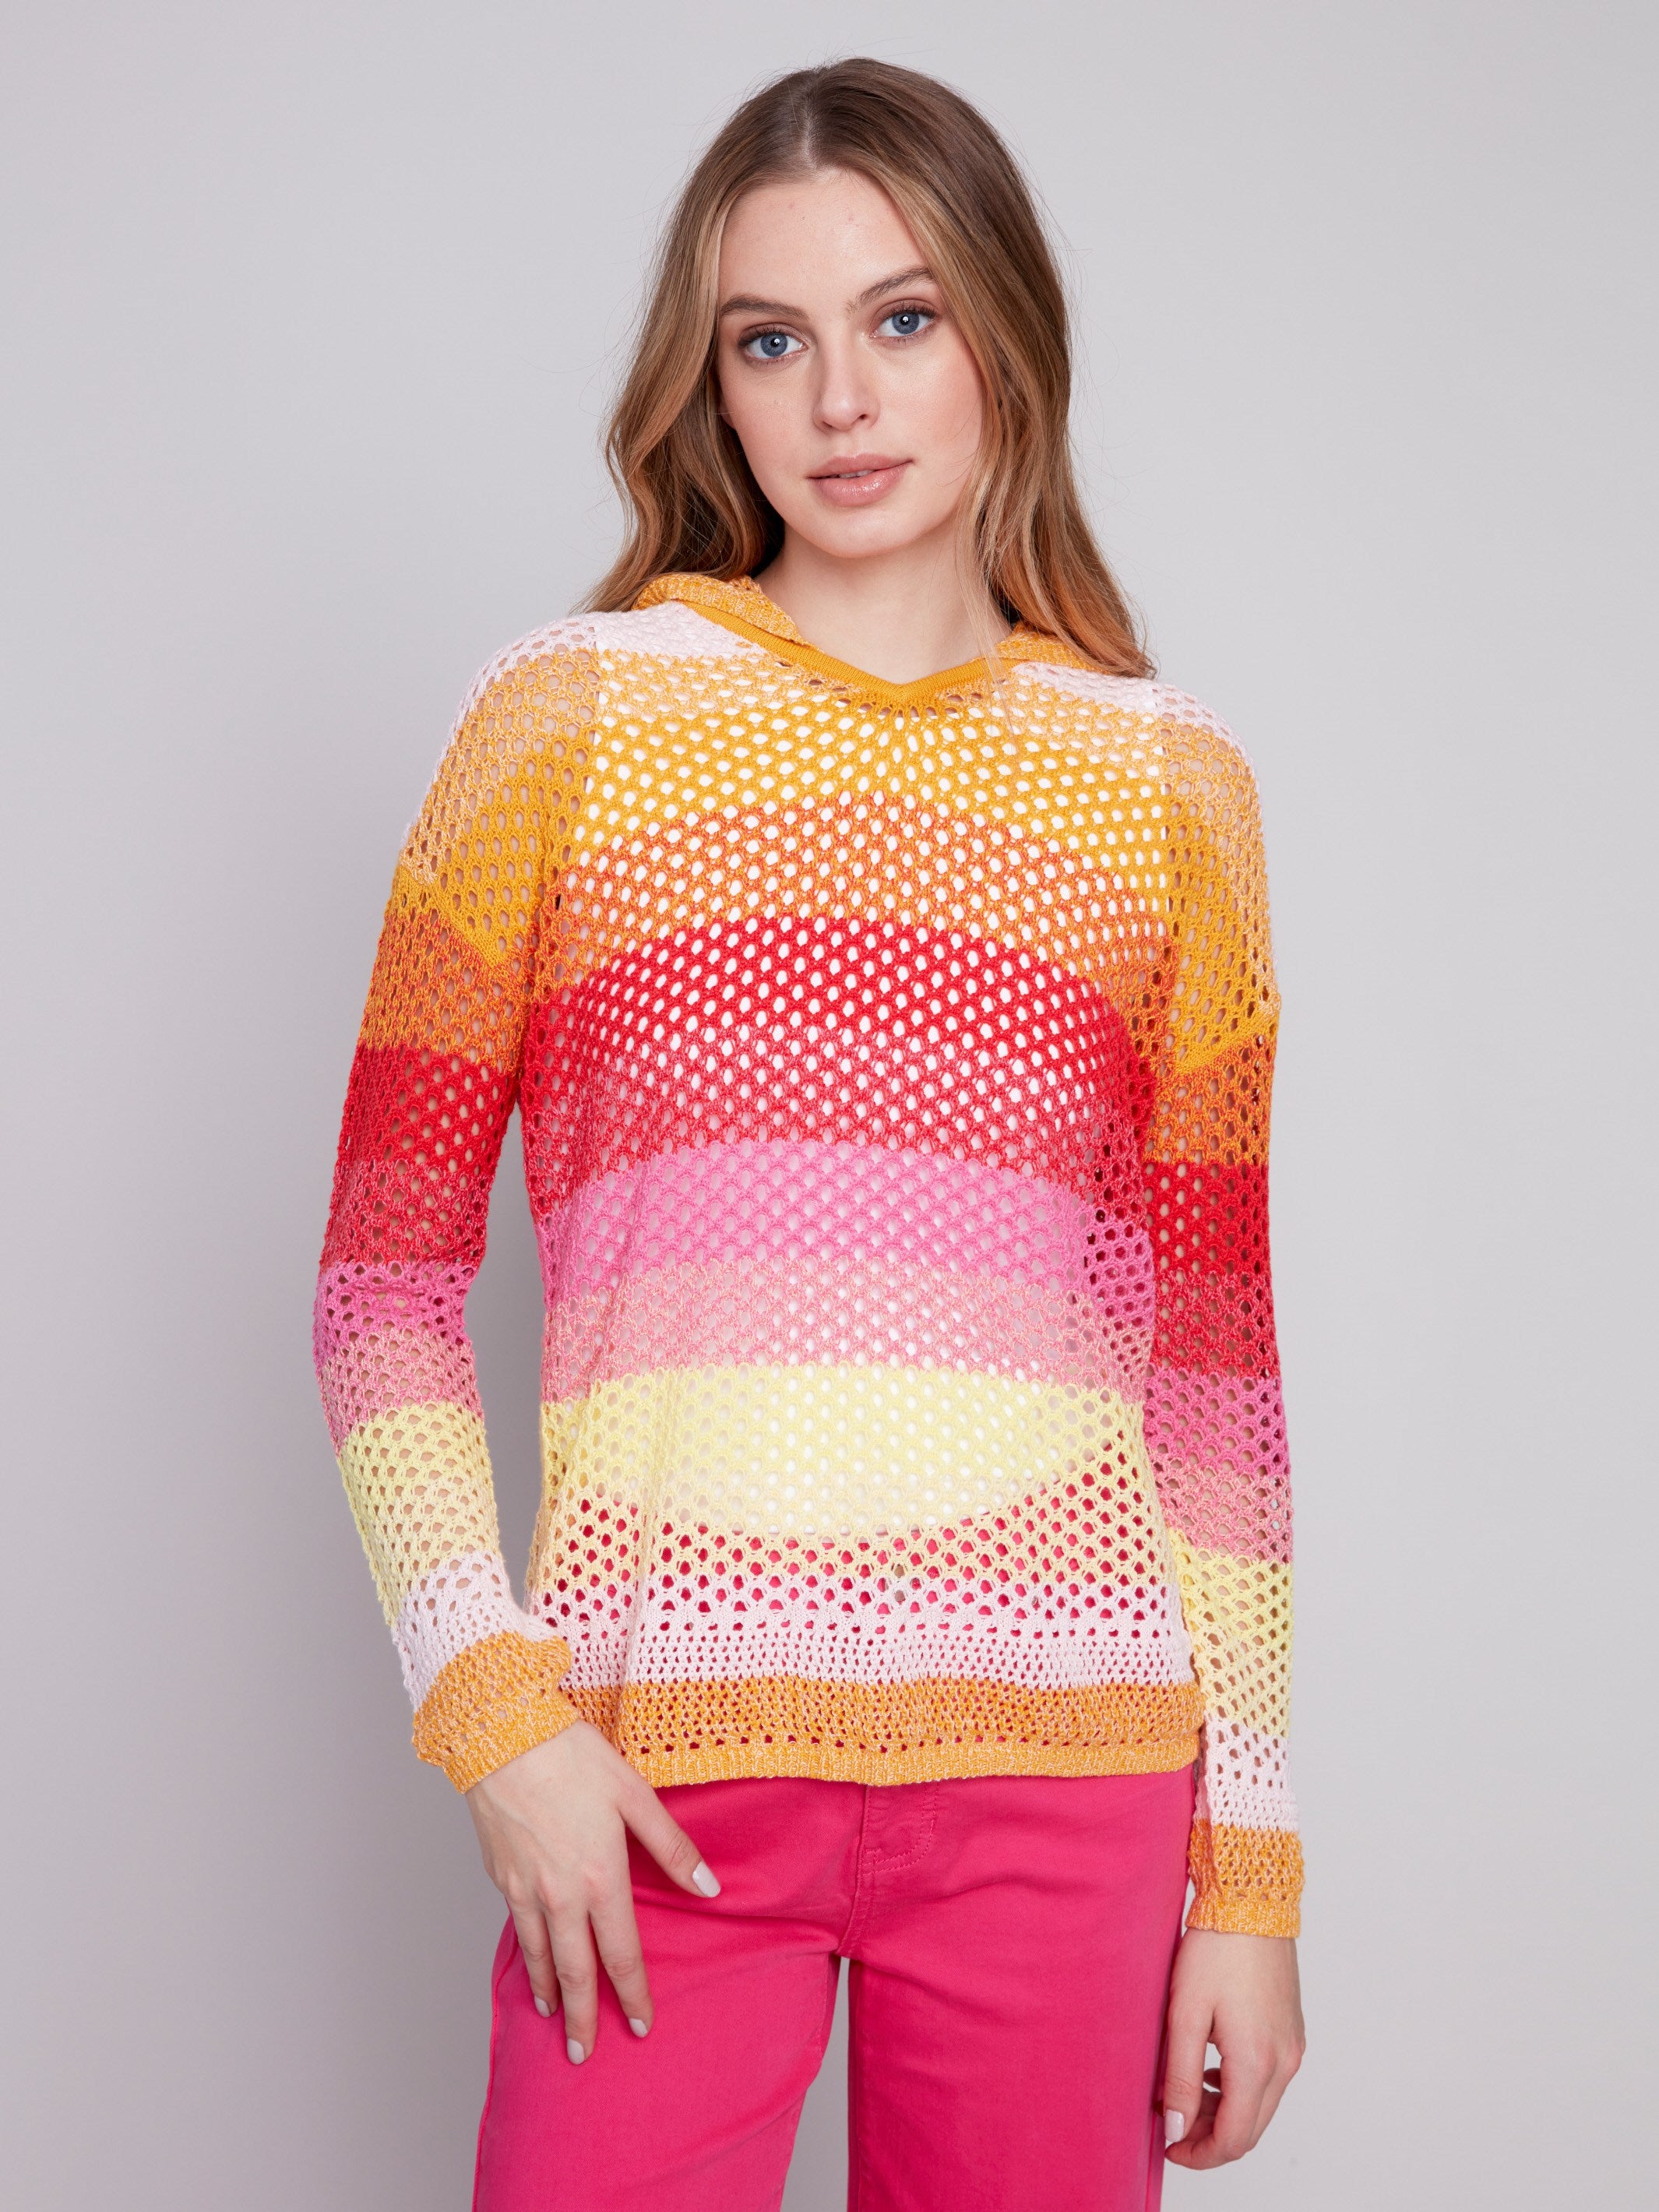 Charlie B Striped Fishnet Crochet Hoodie Sweater - Punch - Image 1